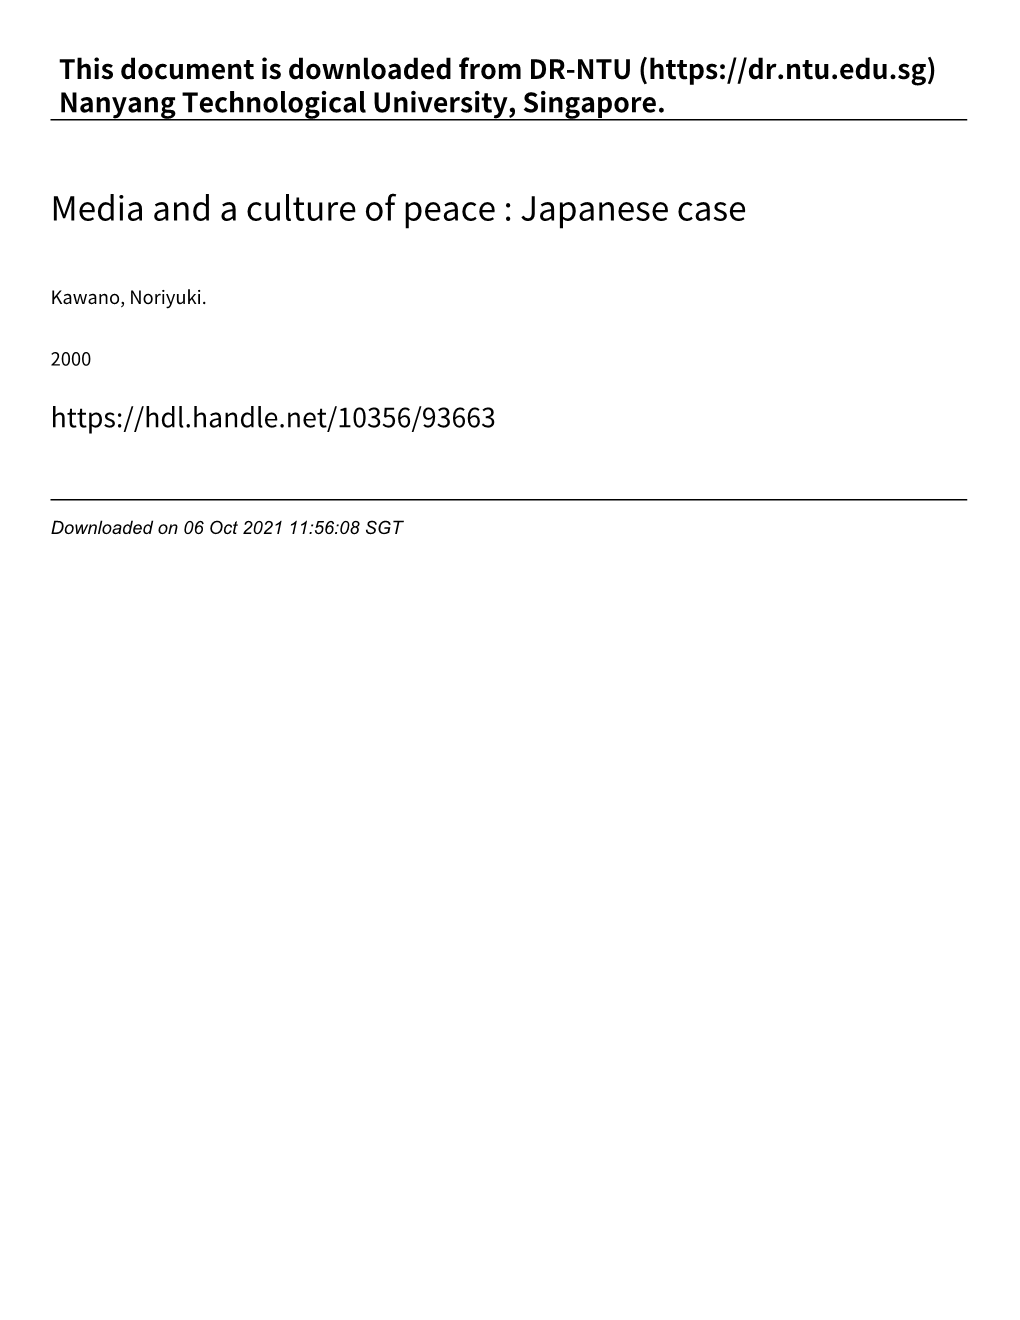 Japanese Case